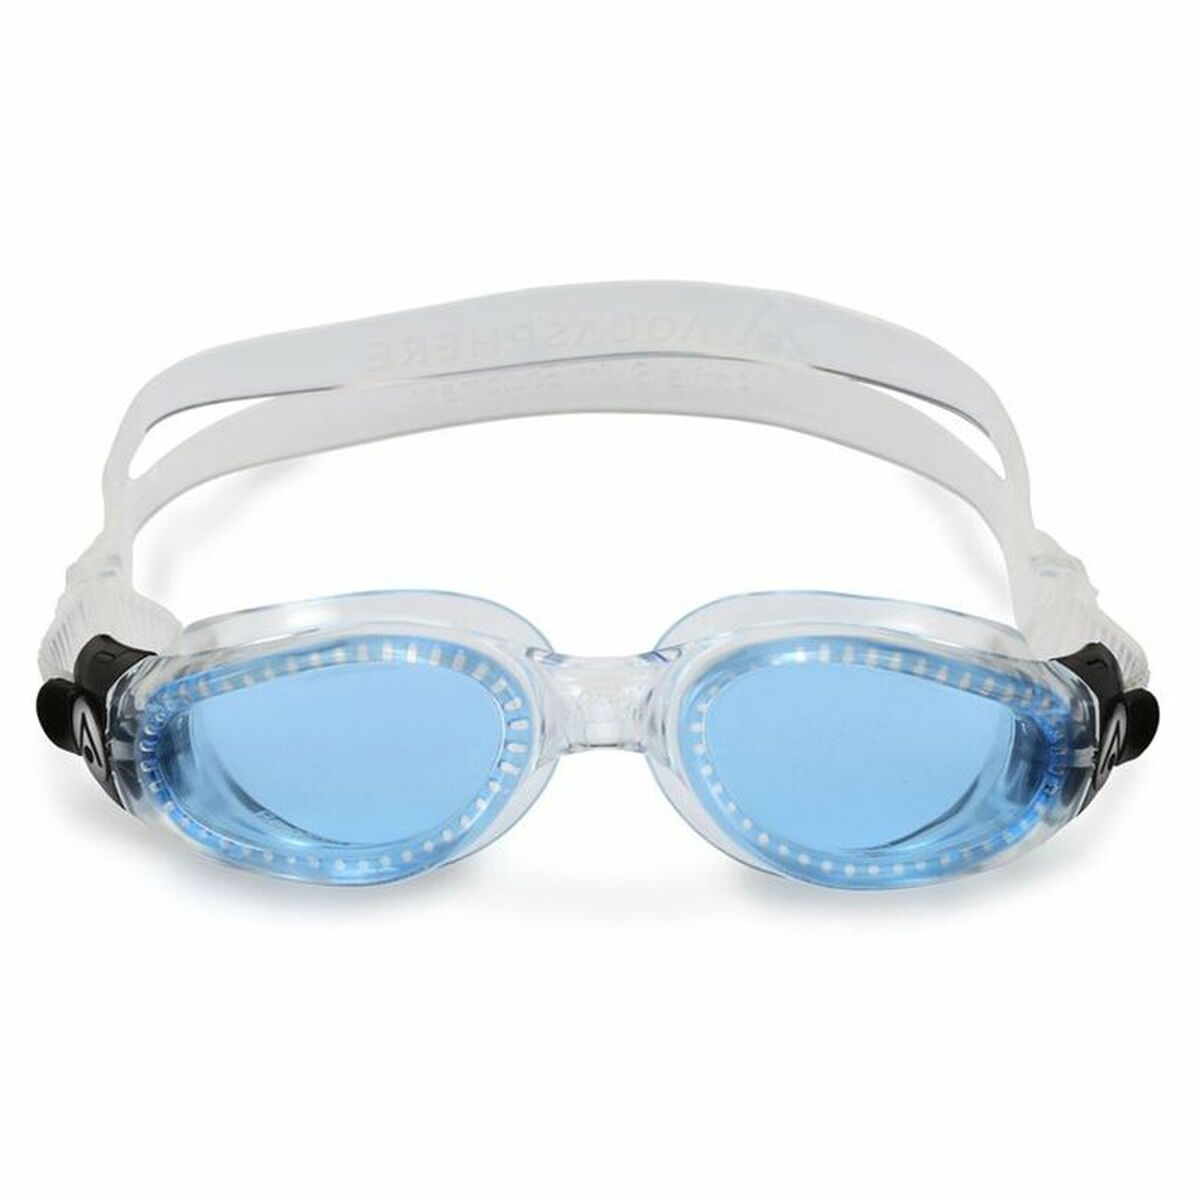 Swimming Goggles Aqua Sphere Kaiman Swim Blue White One size Adults